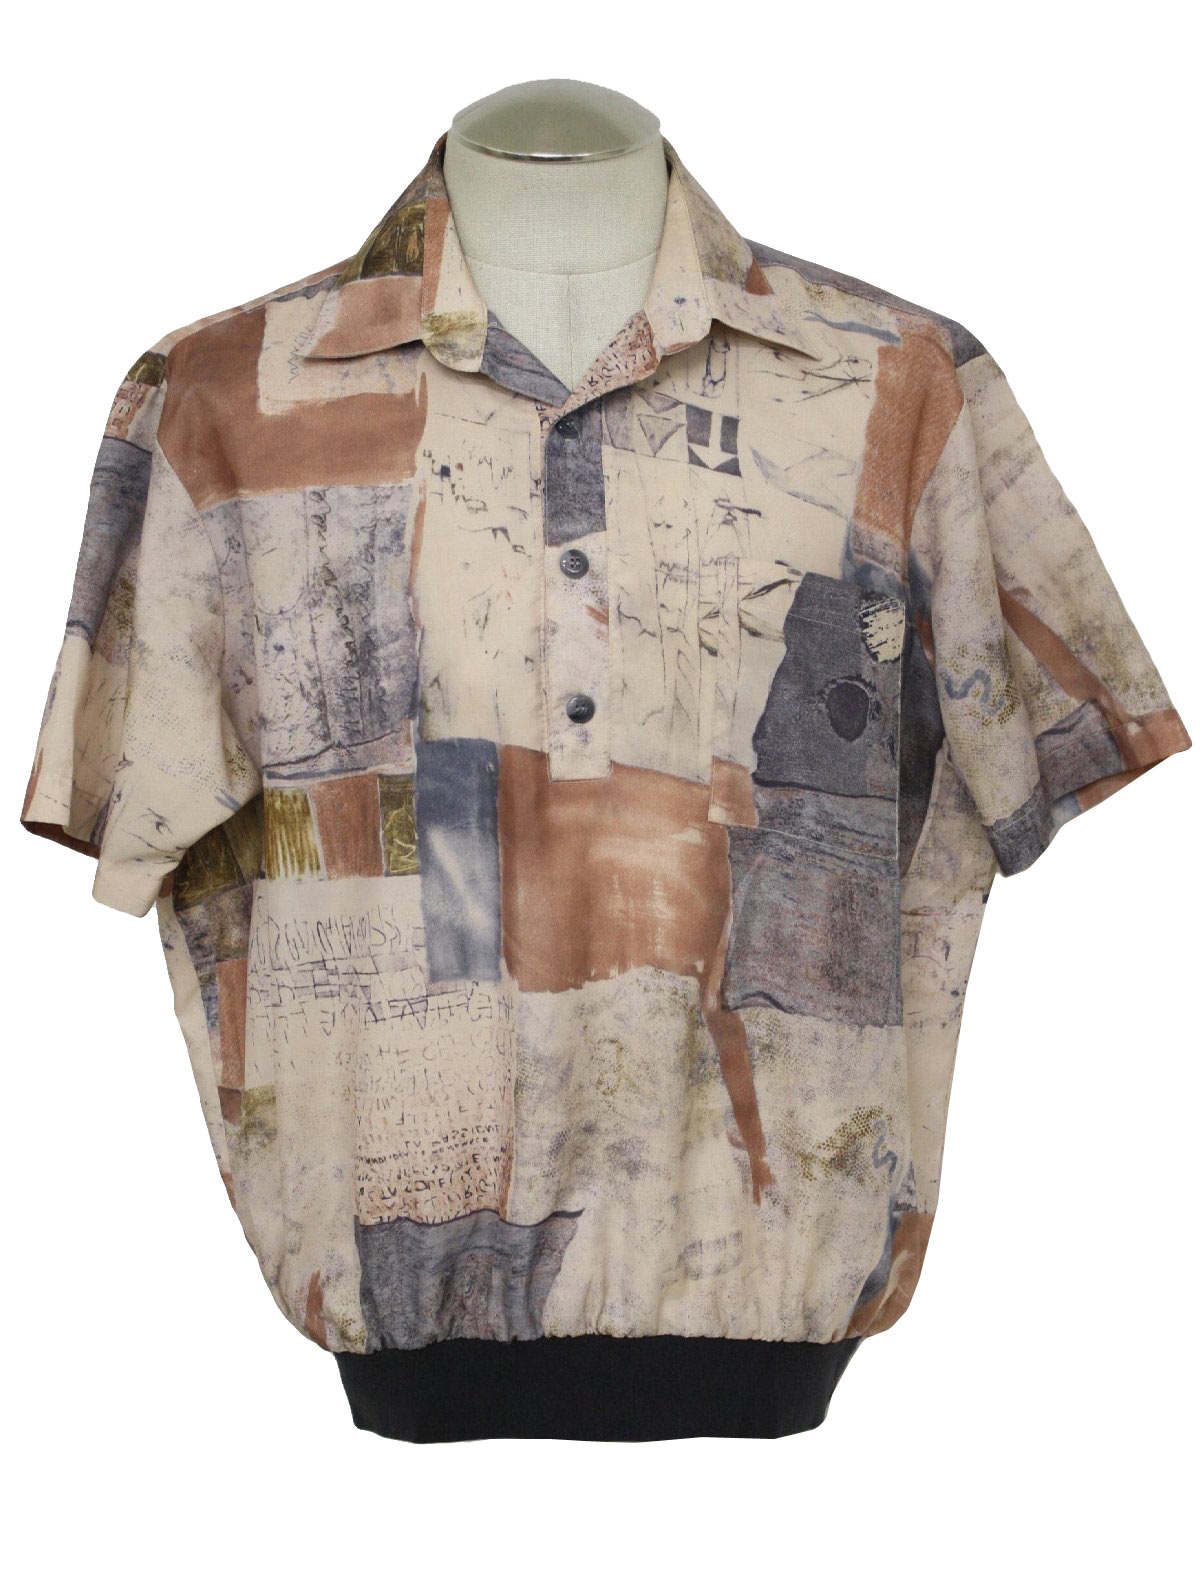 Fulton Street Shirt Works 90's Vintage Shirt: Early 90s -Fulton Street ...